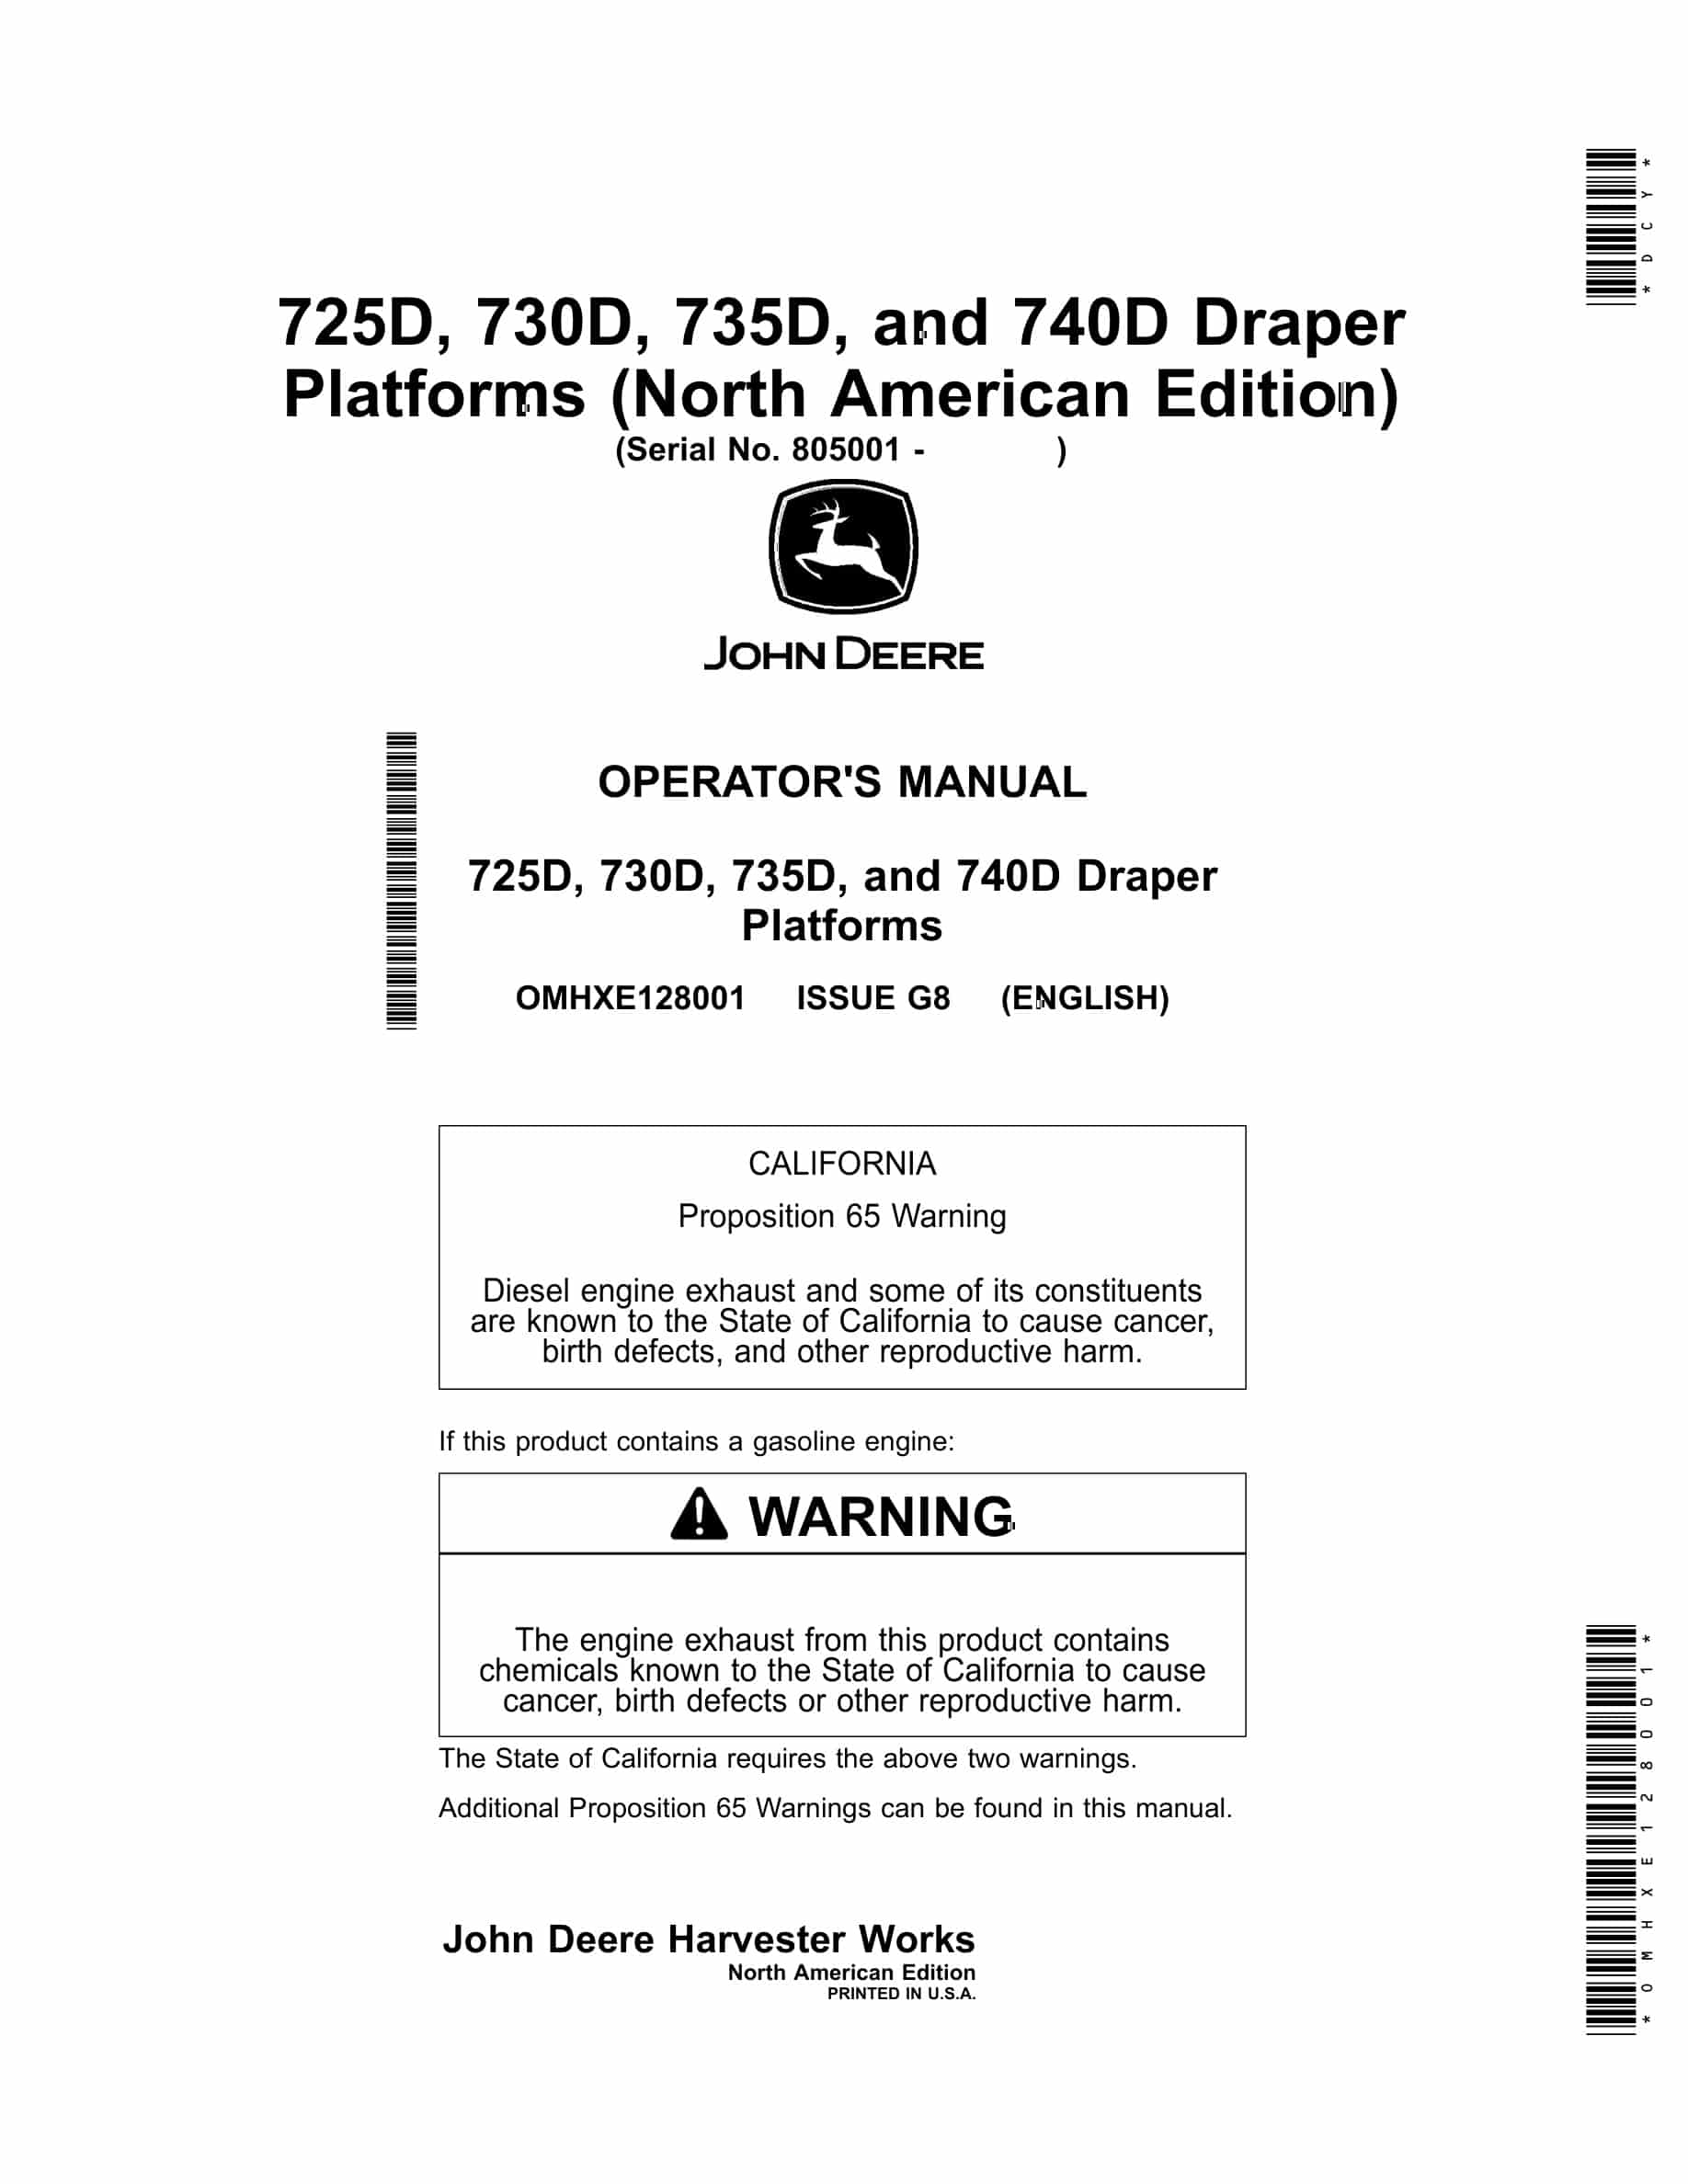 John Deere 725D, 730D, 735D, and 740D Draper Platforms Operator Manual OMHXE128001-1